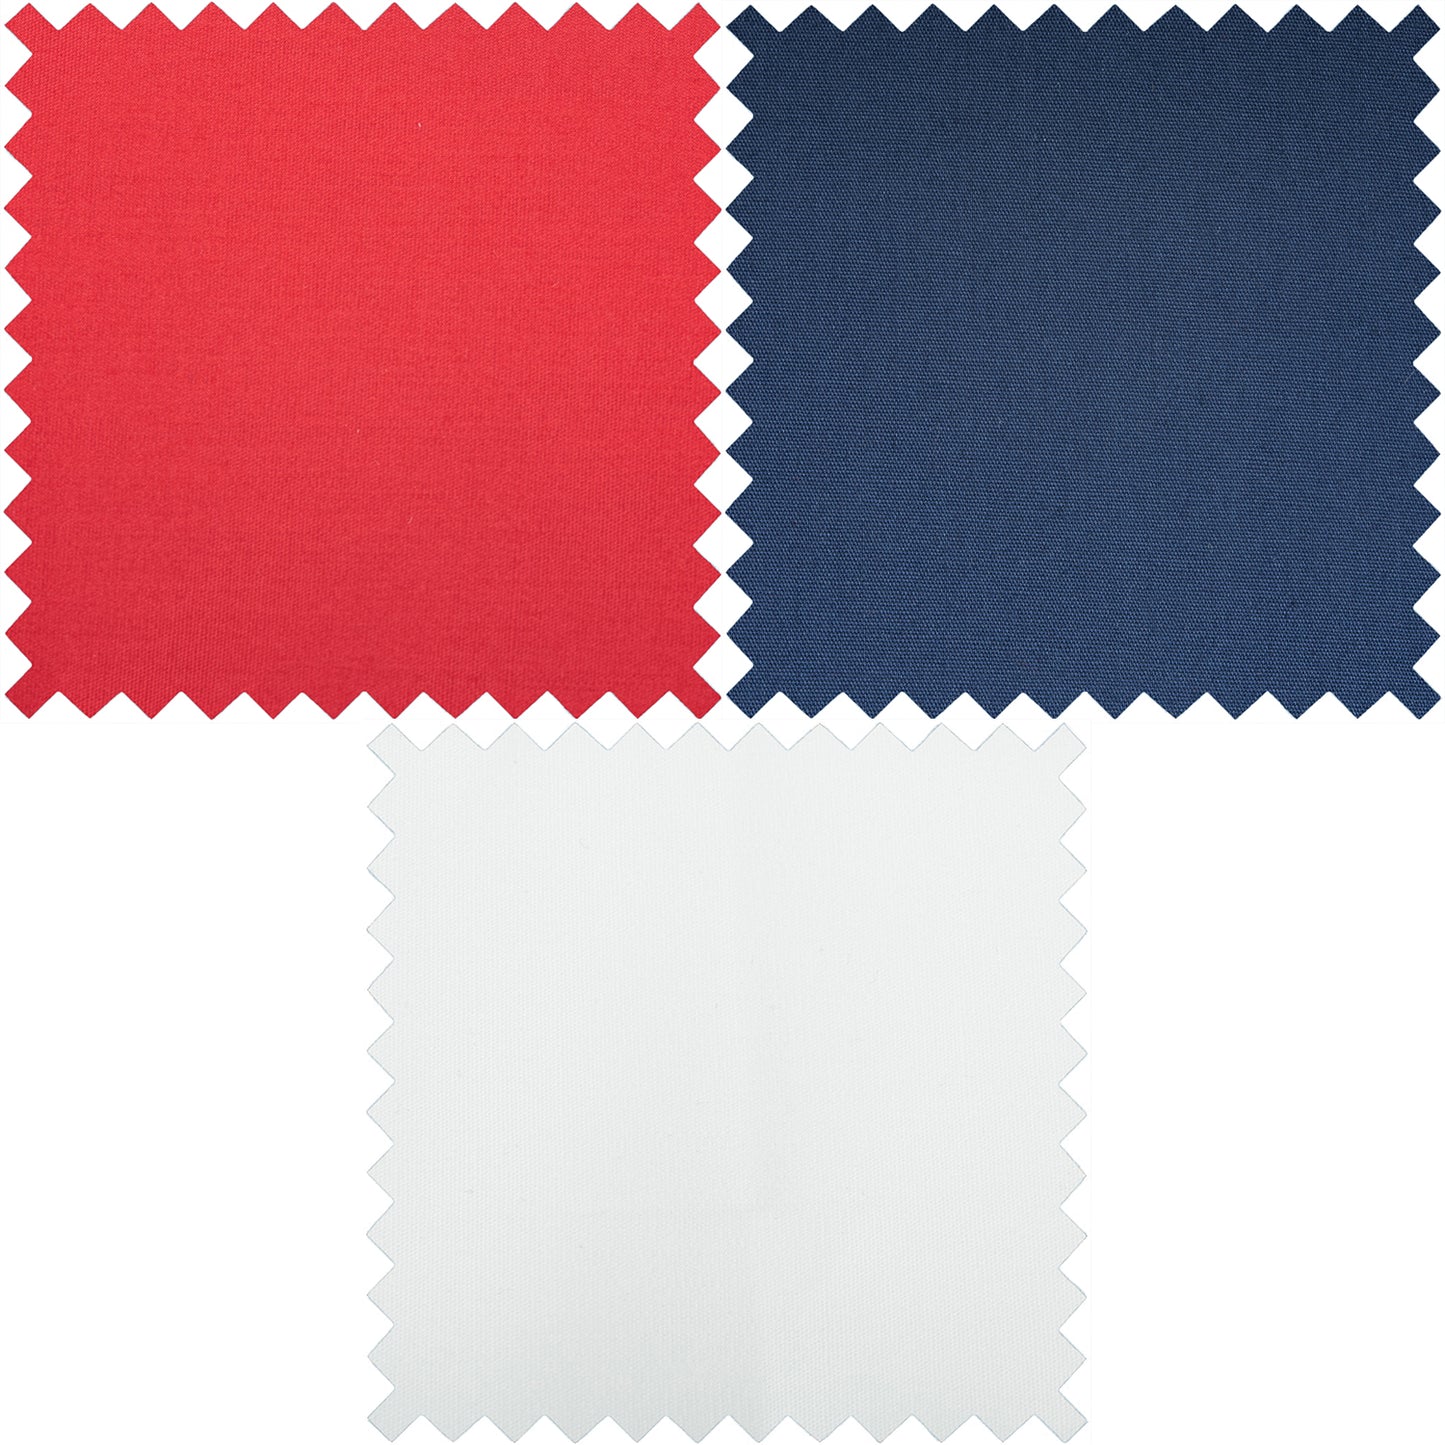 FAT QUARTERS - RED, WHITE & BLUE - 3 Pcs